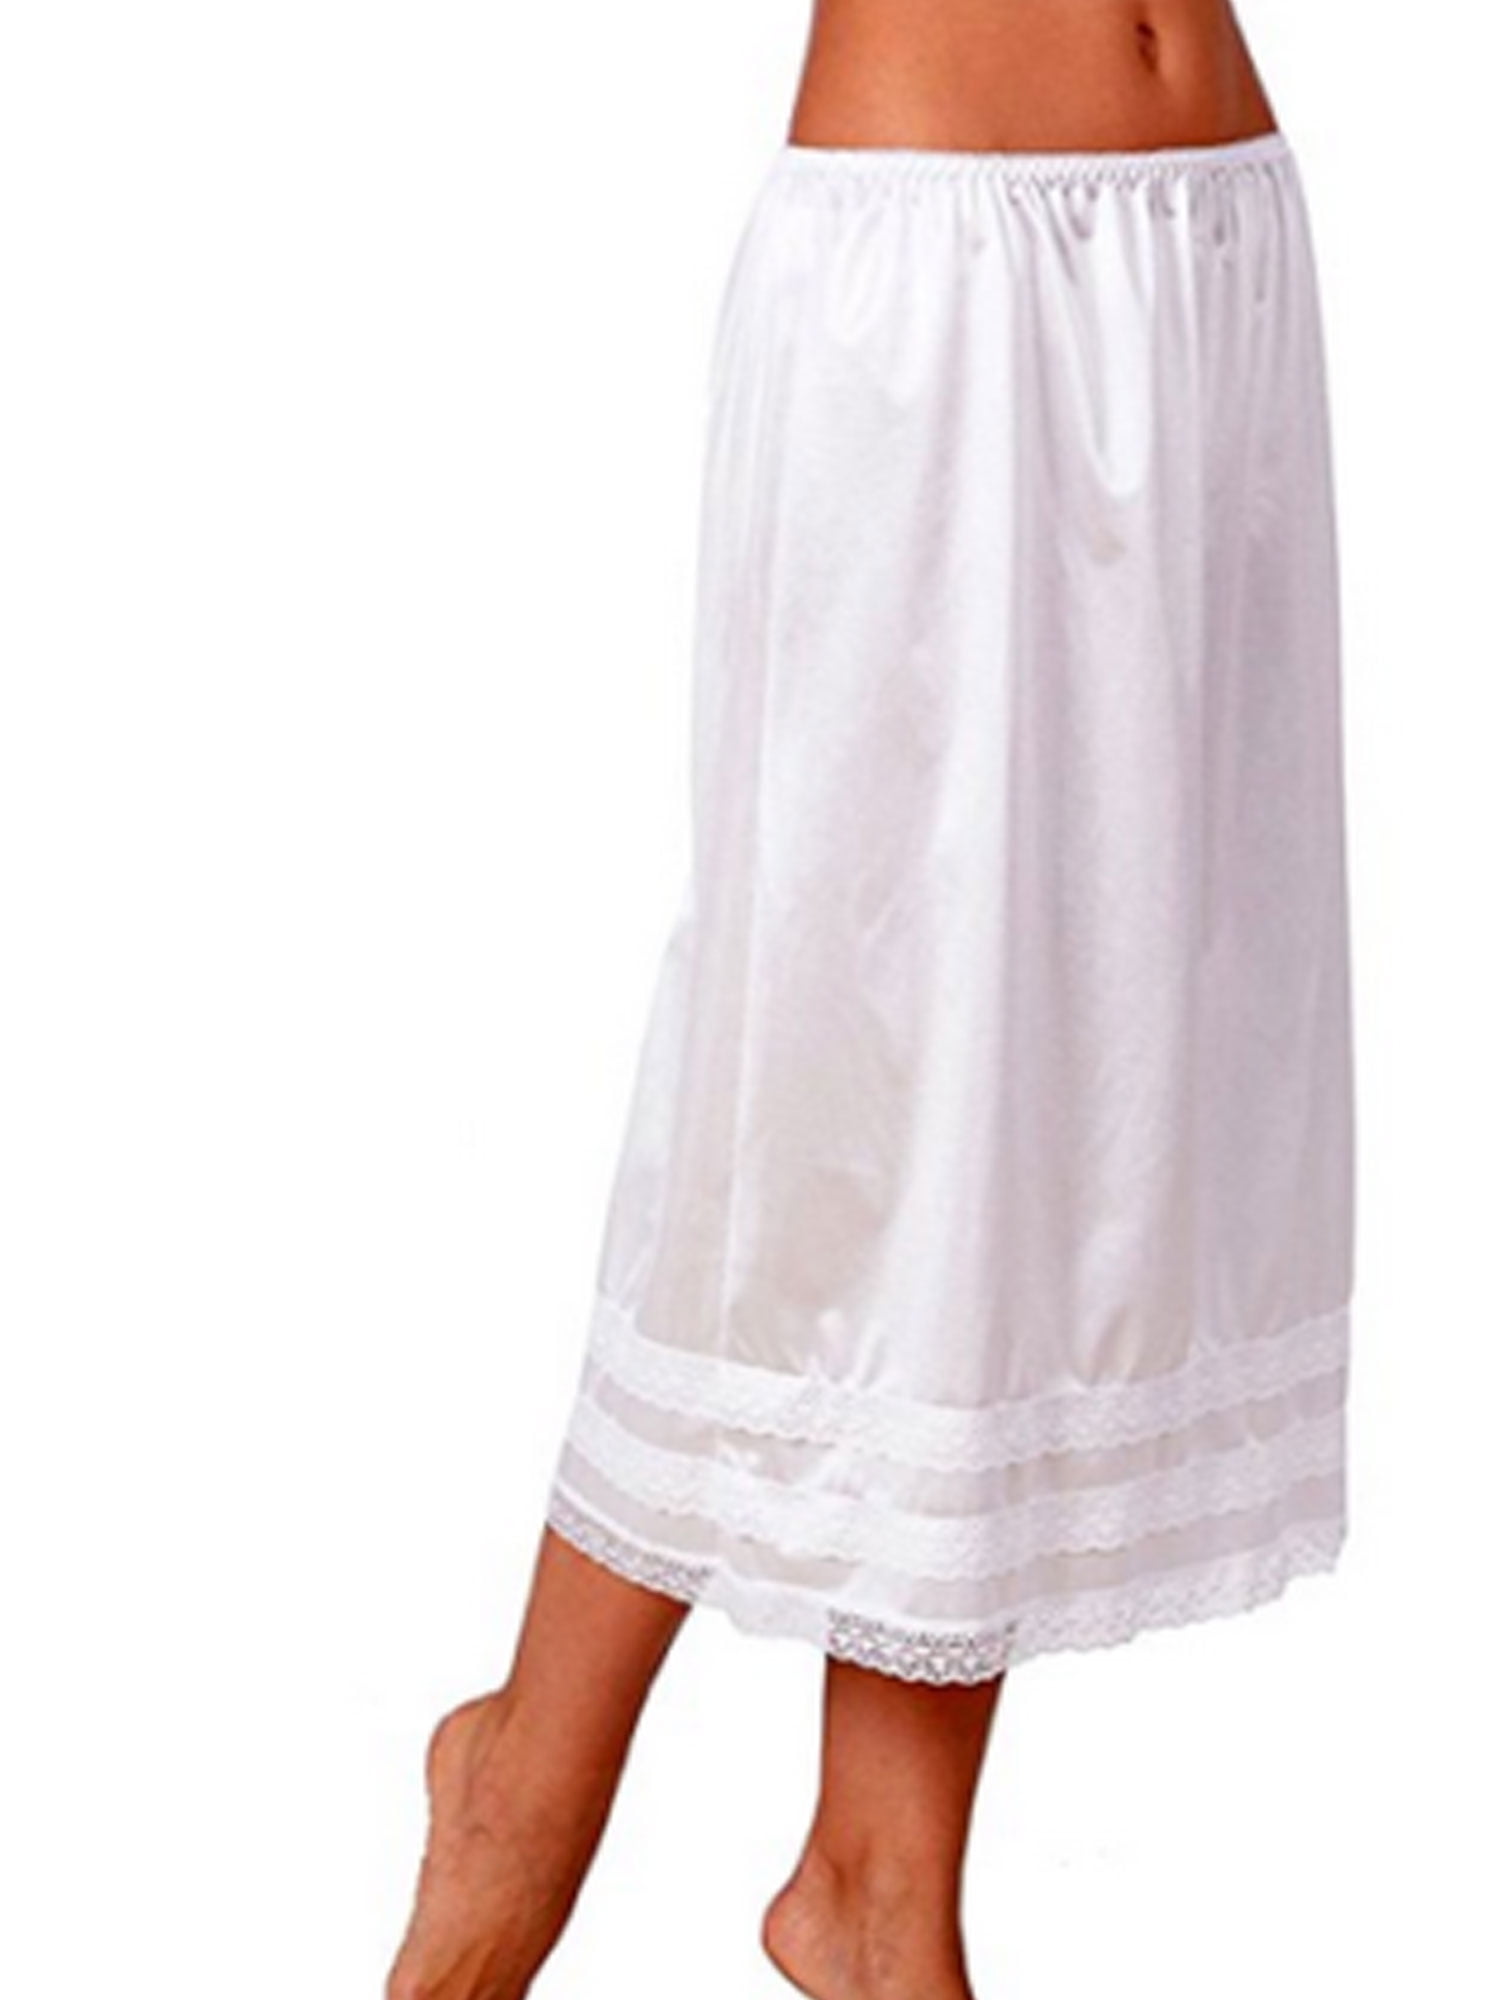 PALE AQUA shiny SATIN white lace waist HALF SLIP petticoat 4 lengths 6 ...